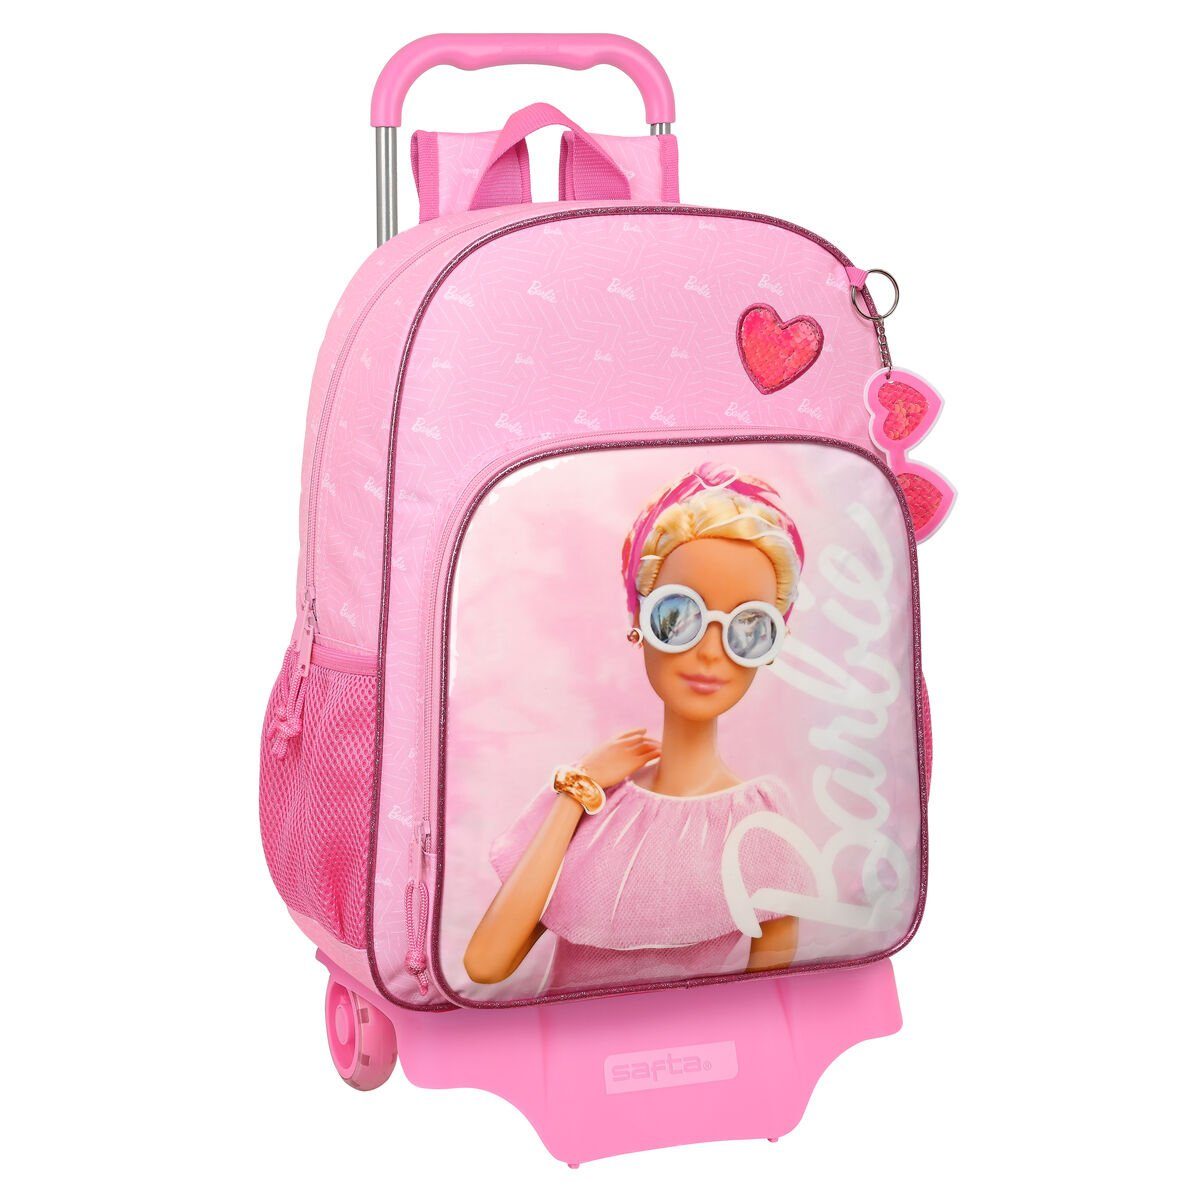 42 x 33 Rucksack Girl Barbie Rosa Kinder-Rucksack cm x mit Barbie Rädern 14